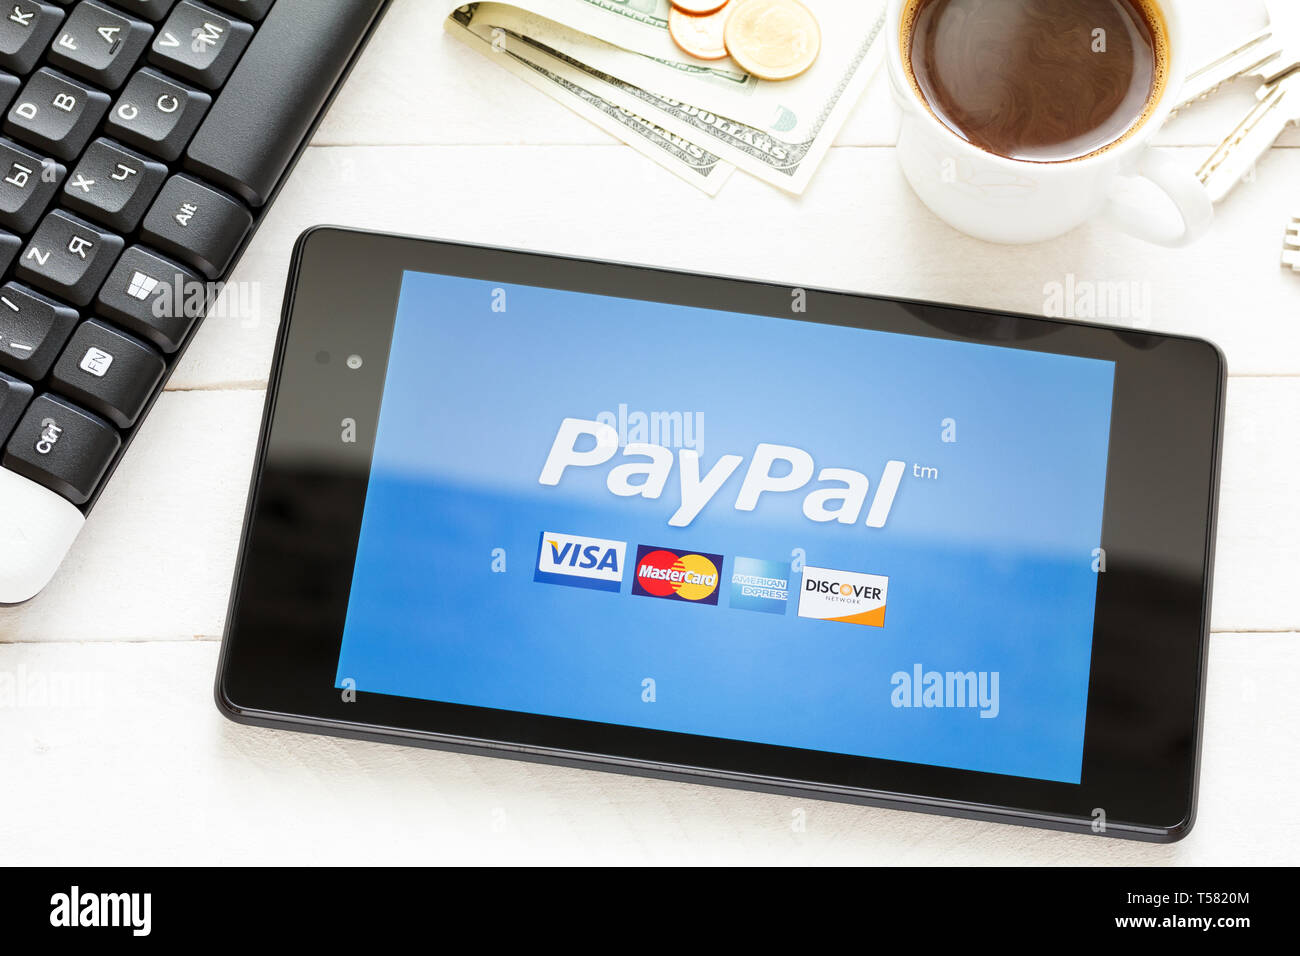 KIEV, UKRAINE - June 9: PayPal payment system logo on tablet, in Kiev, Ukraine, on June 9, 2014. Stock Photo